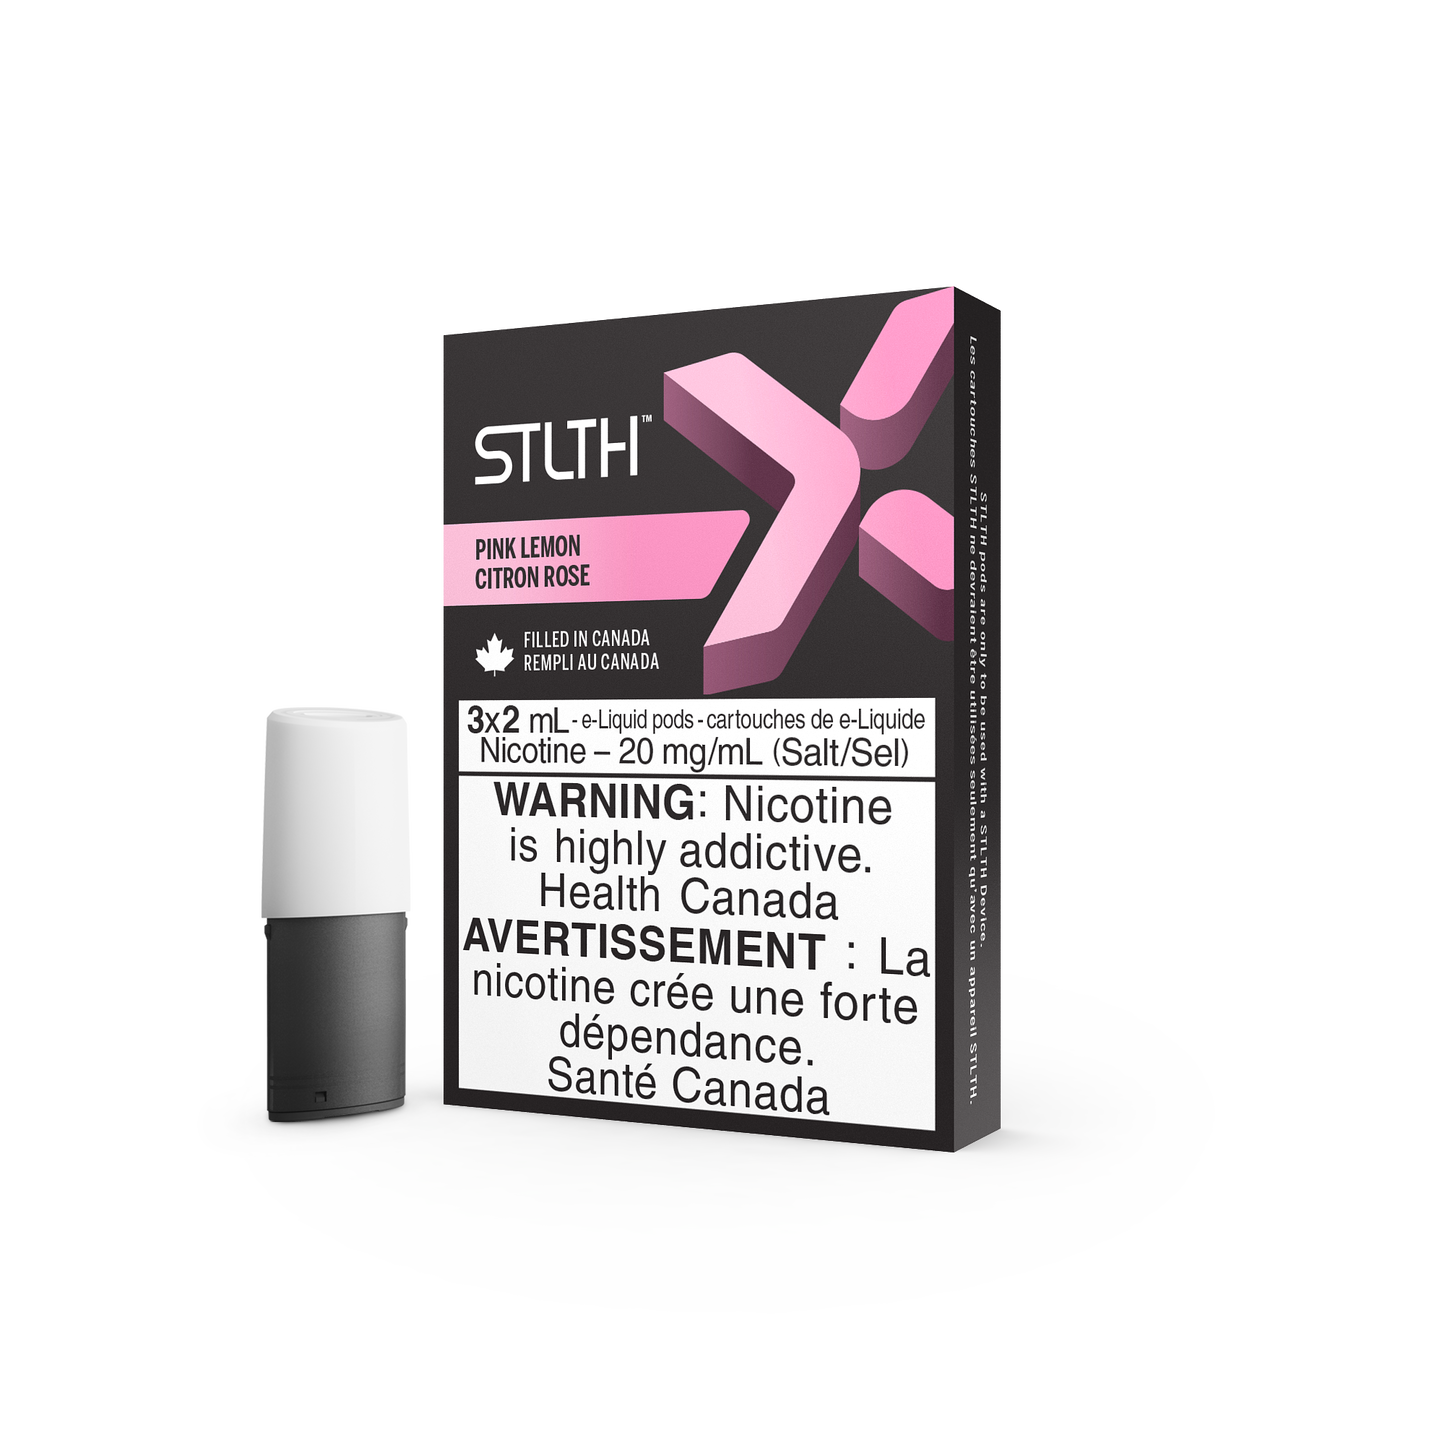 Stlth X Pods - Pink Lemon